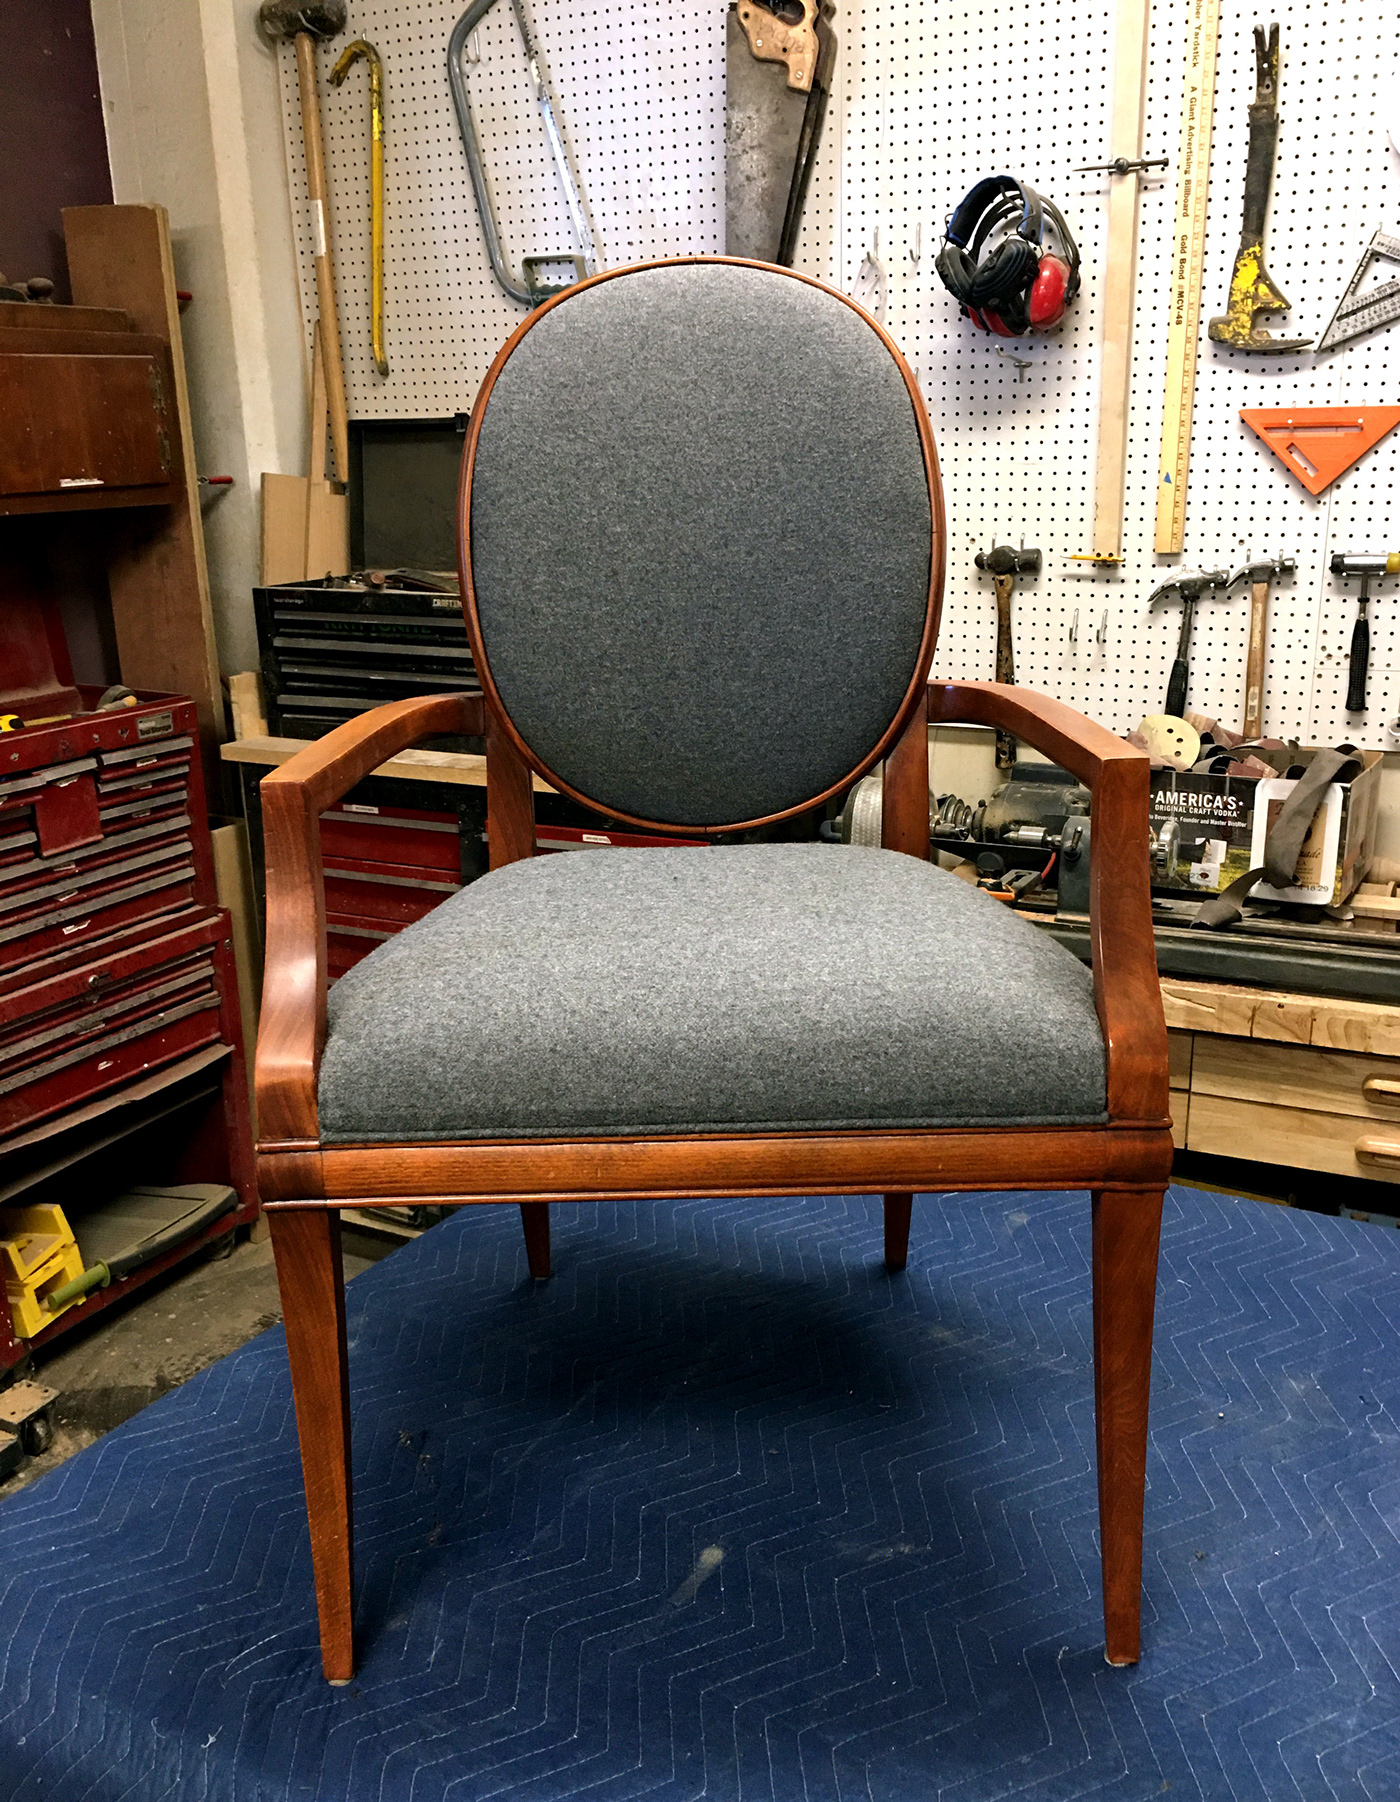 chair furniture interior design  furniture design  wood upholstery restoration refurbishment reupholstery textile